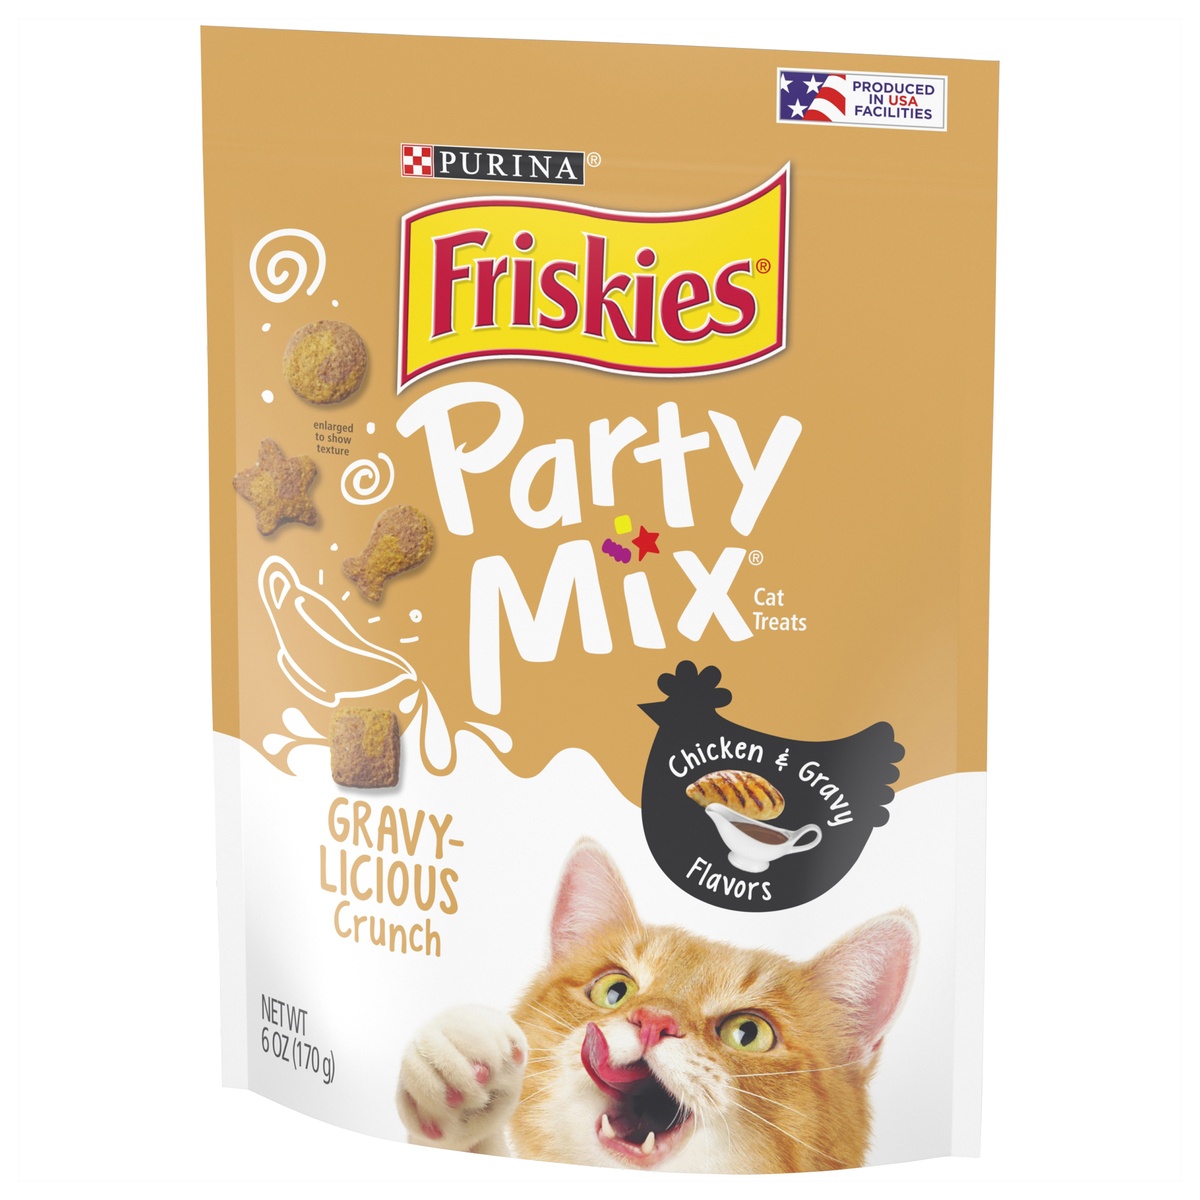 slide 9 of 10, Friskies Party Mix Gravylicious Chicken Gravy Crunch Cat Treats, 6 oz